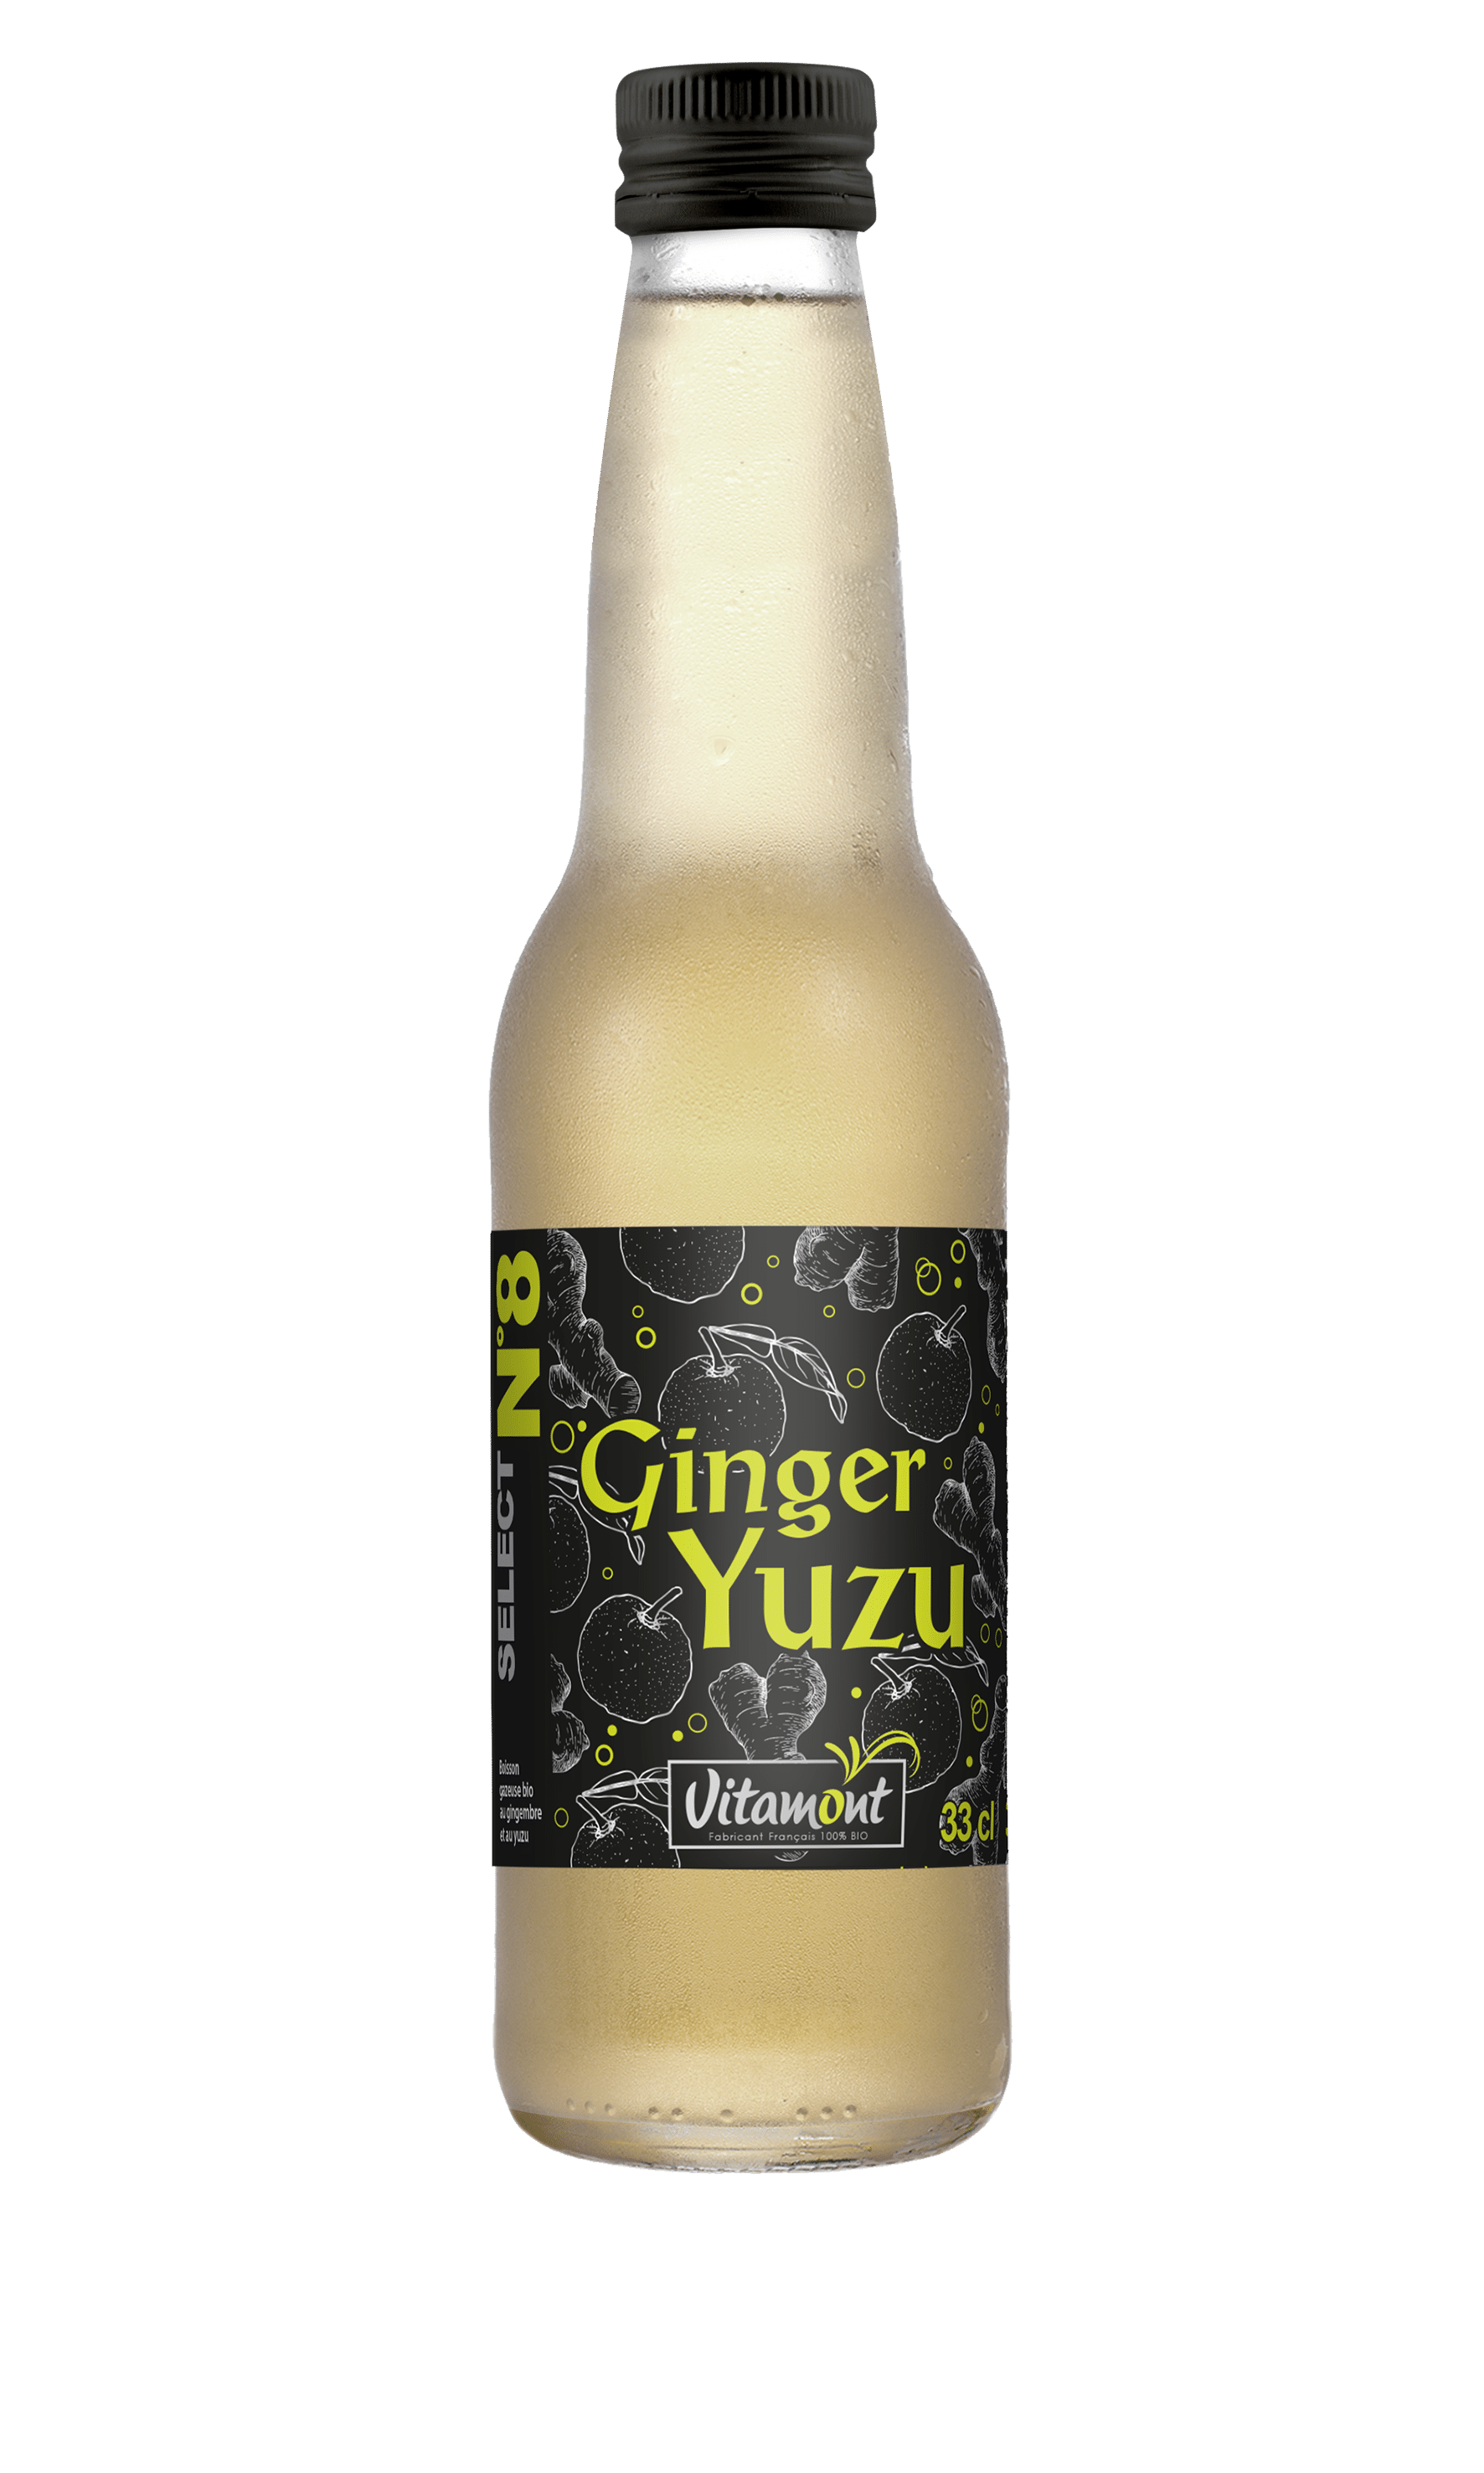 N°8 Ginger Yuzu bio